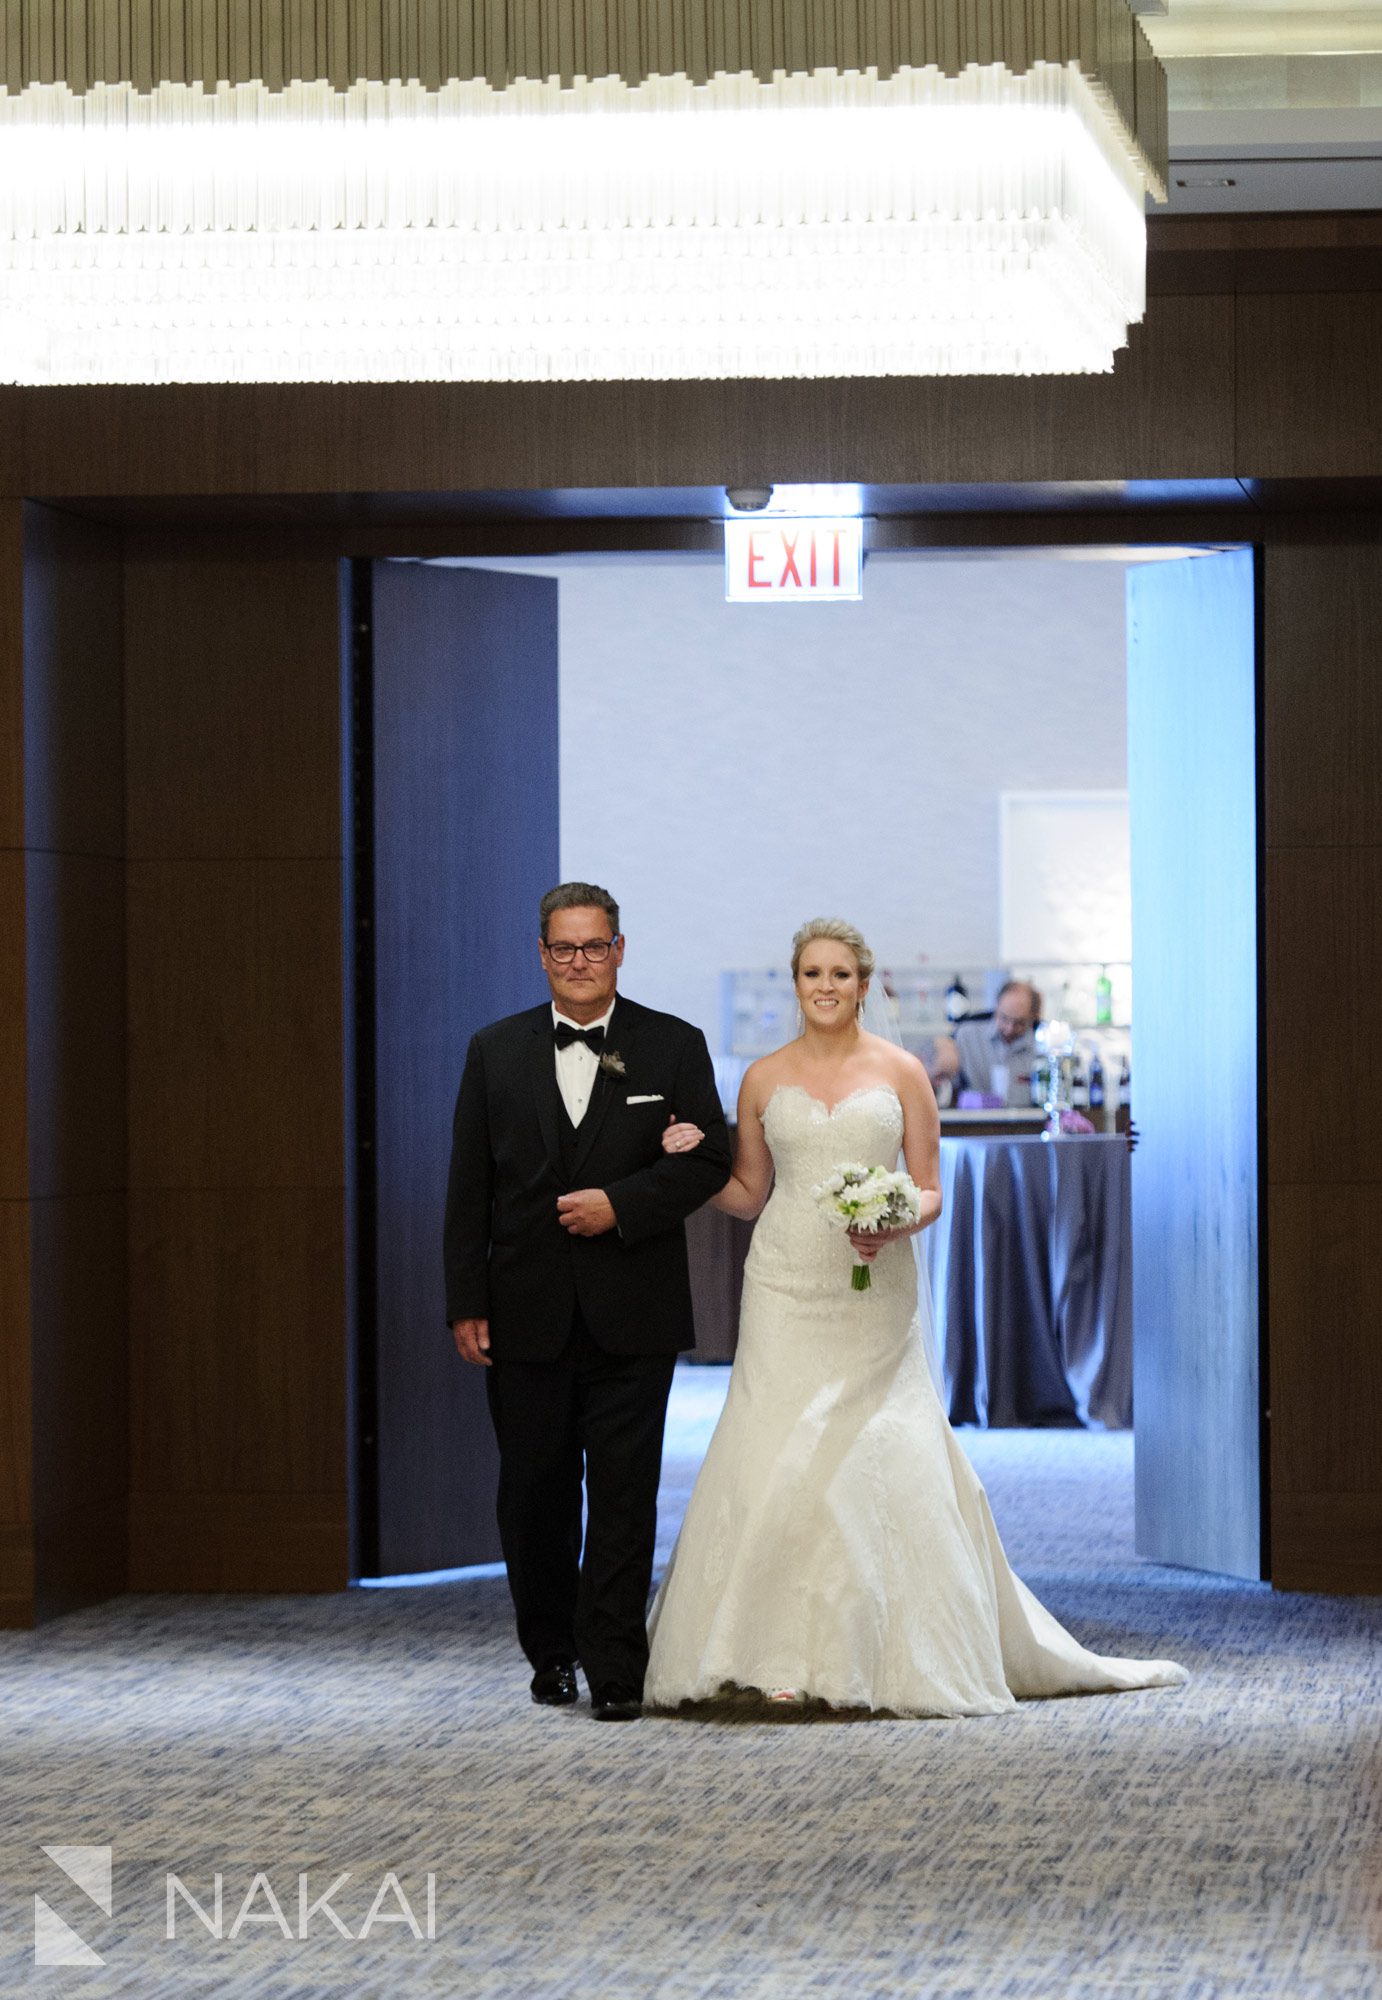 ritz Carlton Chicago wedding pictures remodeled renovation ballroom 